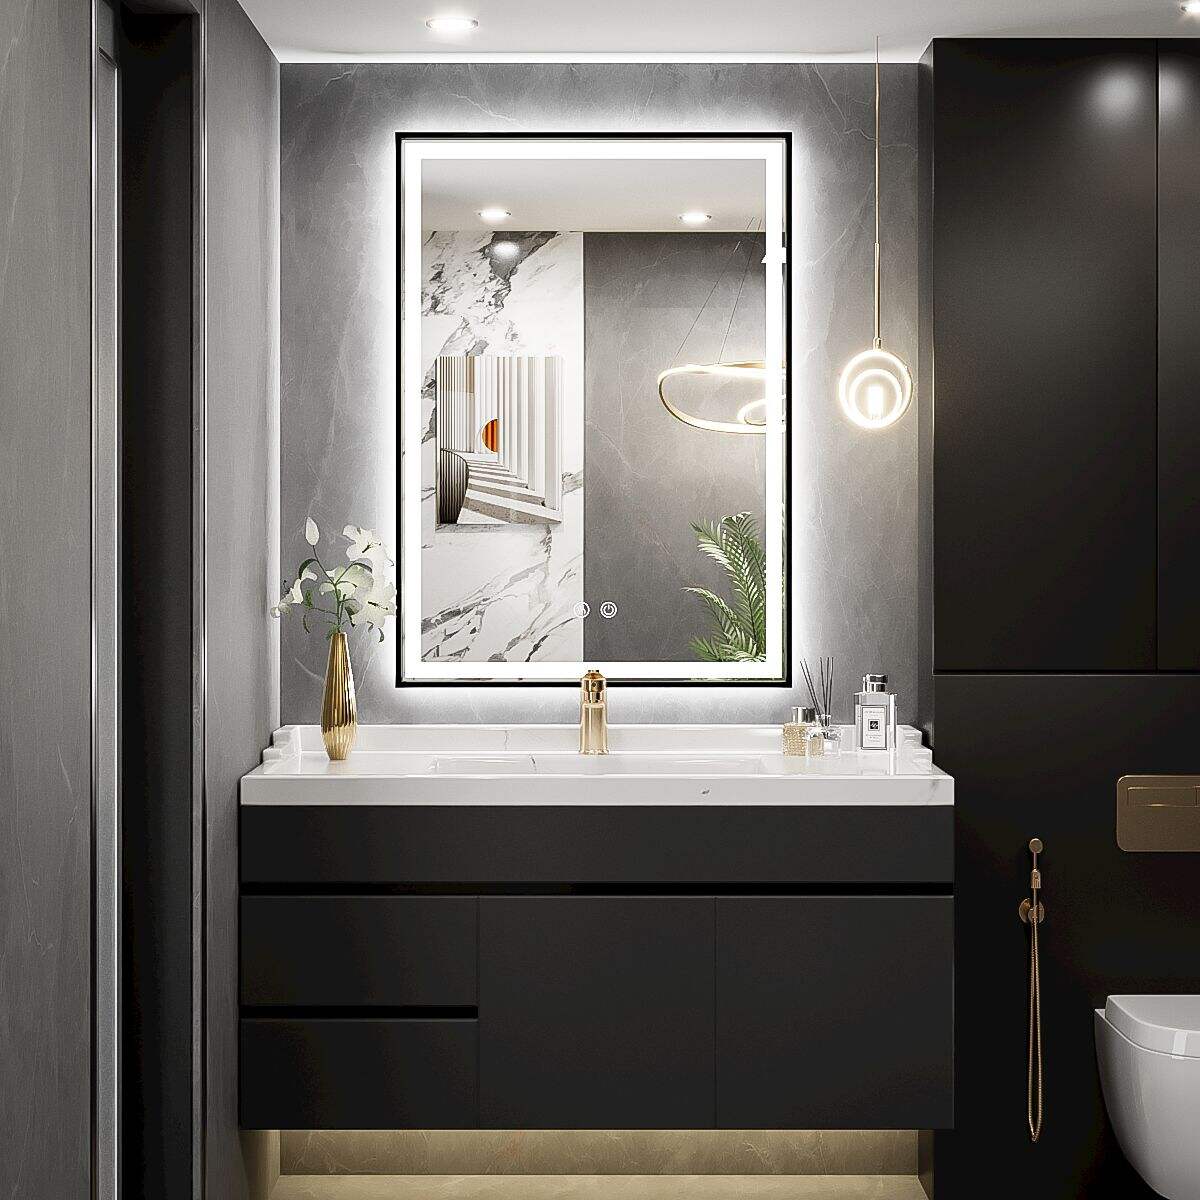 JJGullit bathroom mirror supplier  Bathroom LED Mirror, 28x20 Inch Frontlit & Backlit Mirror, Bathroom Vanity Mirror with Lights, French Cleats Wall Mount Anti-Fog Lighted Mirror(Horizon)